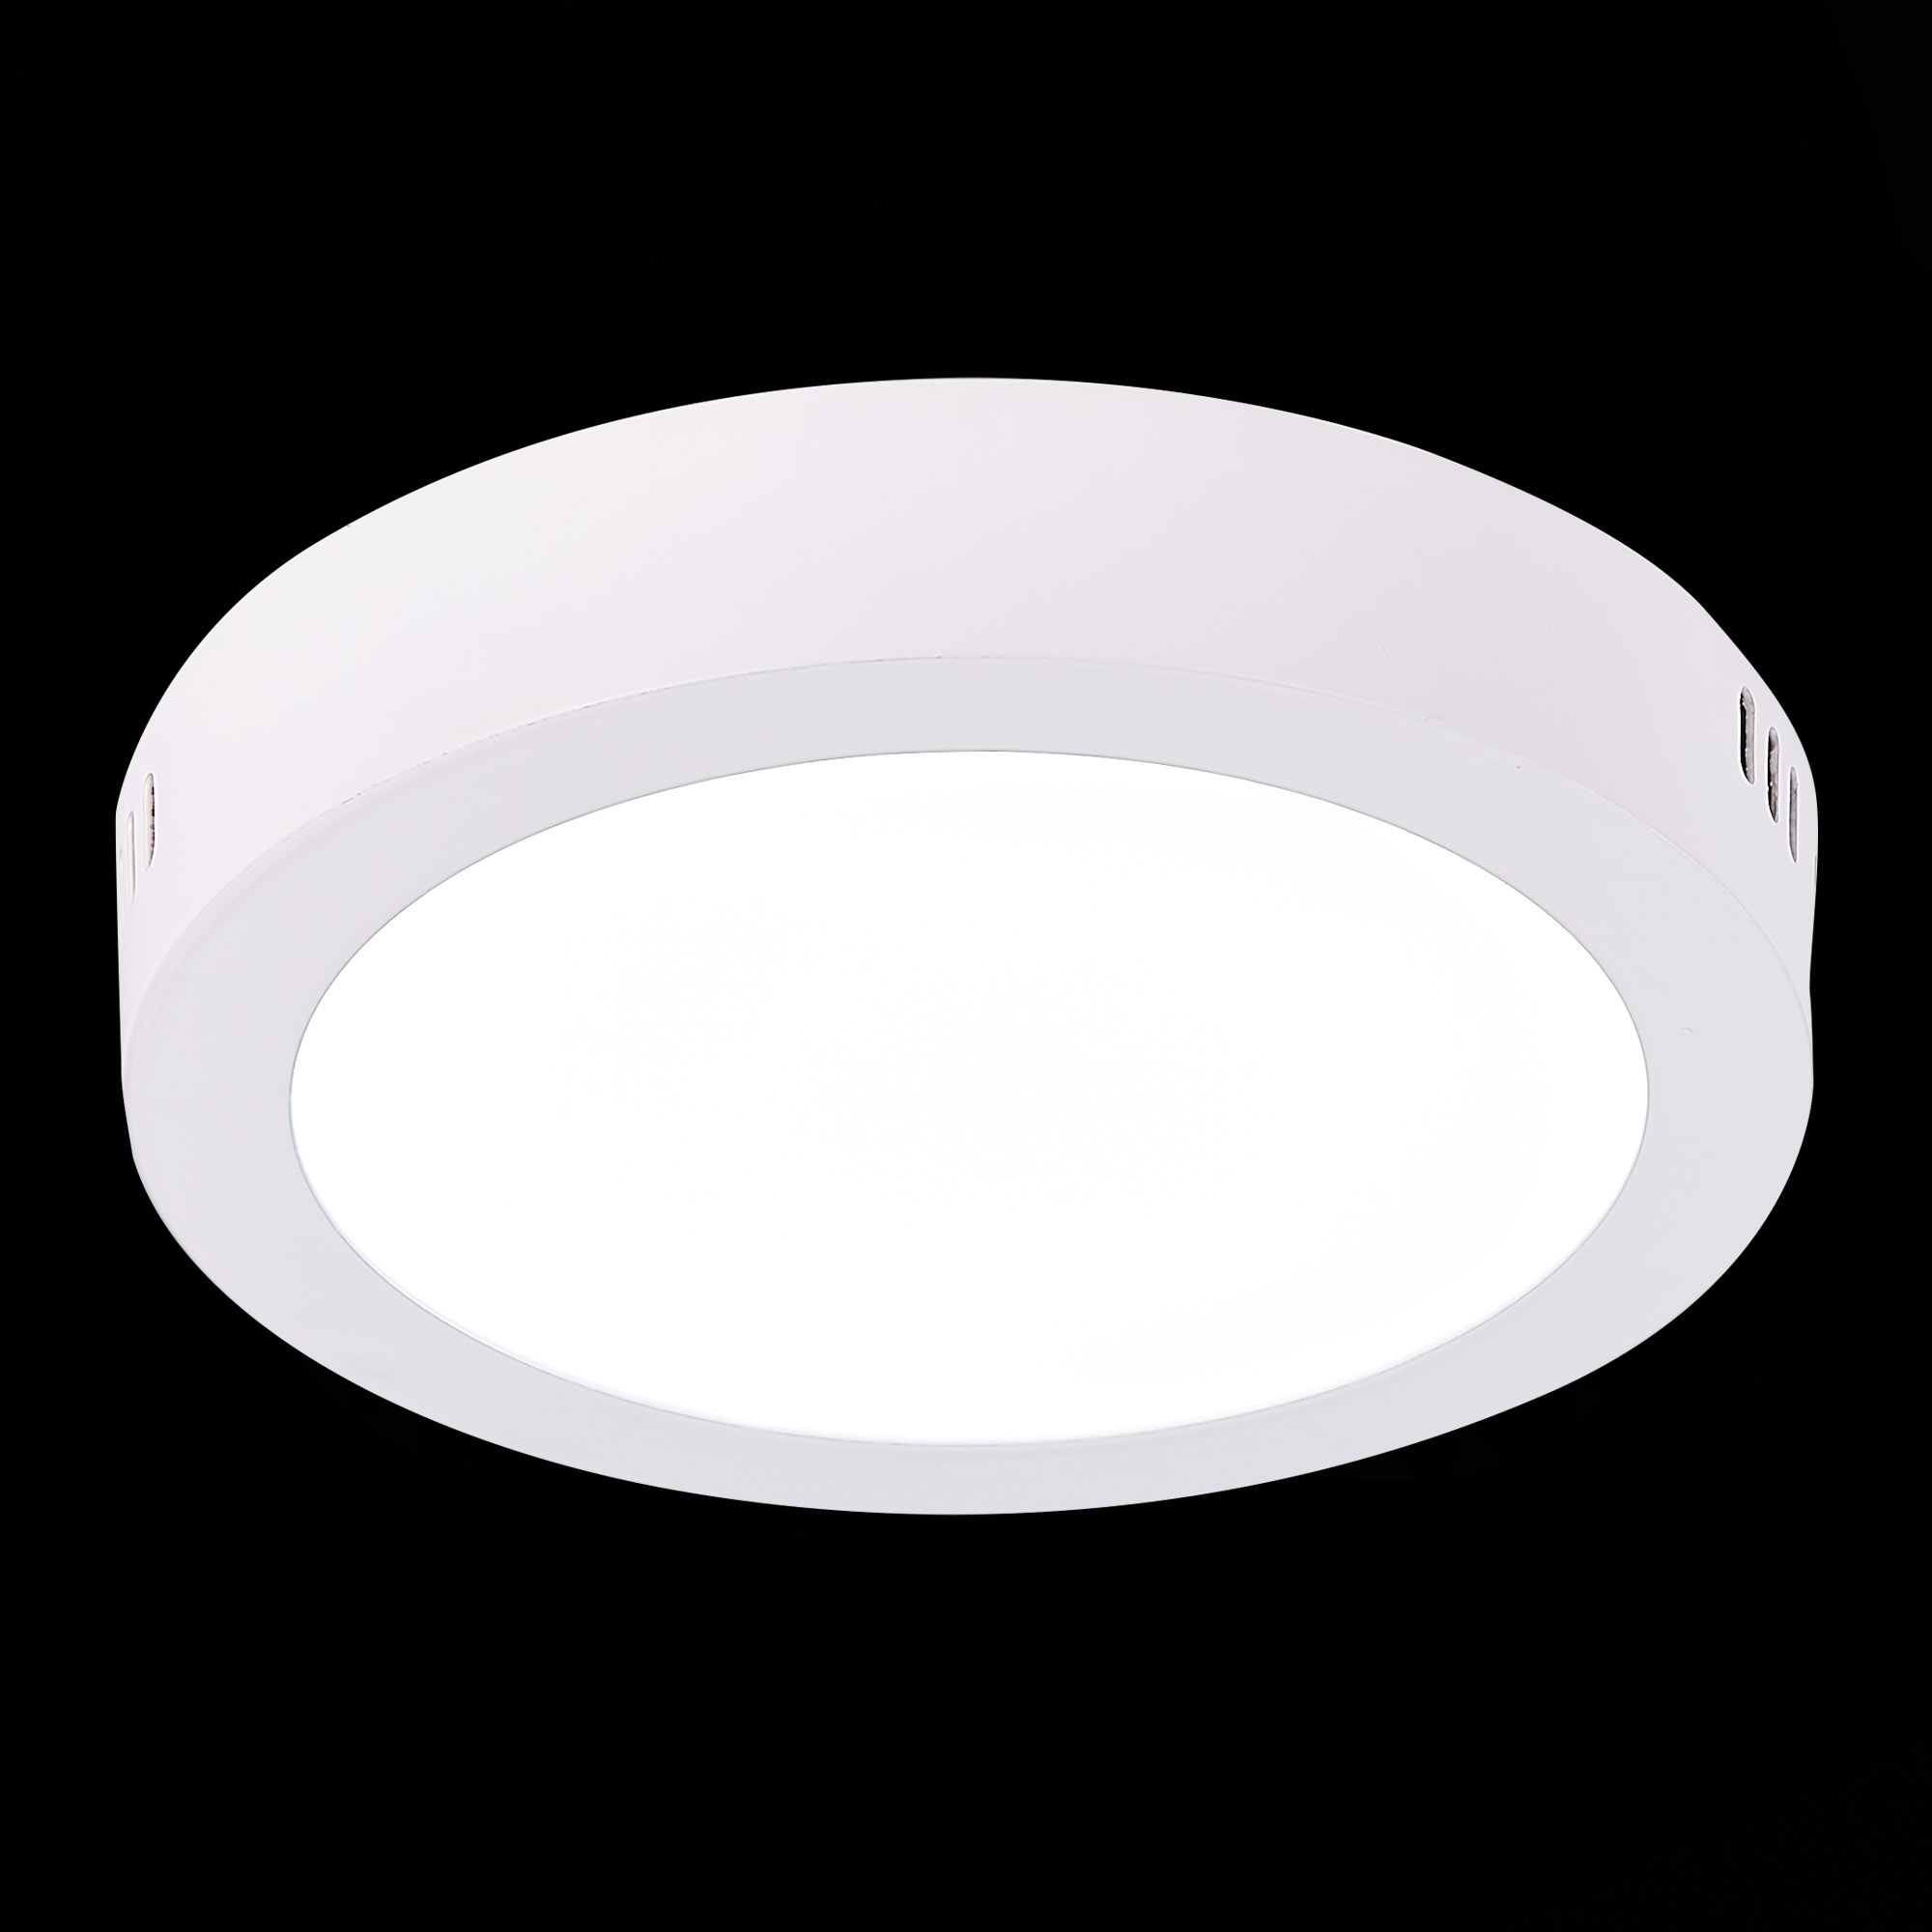 светильник настенно-потолочный st luce st112.542.12, артикул ST112.542.12